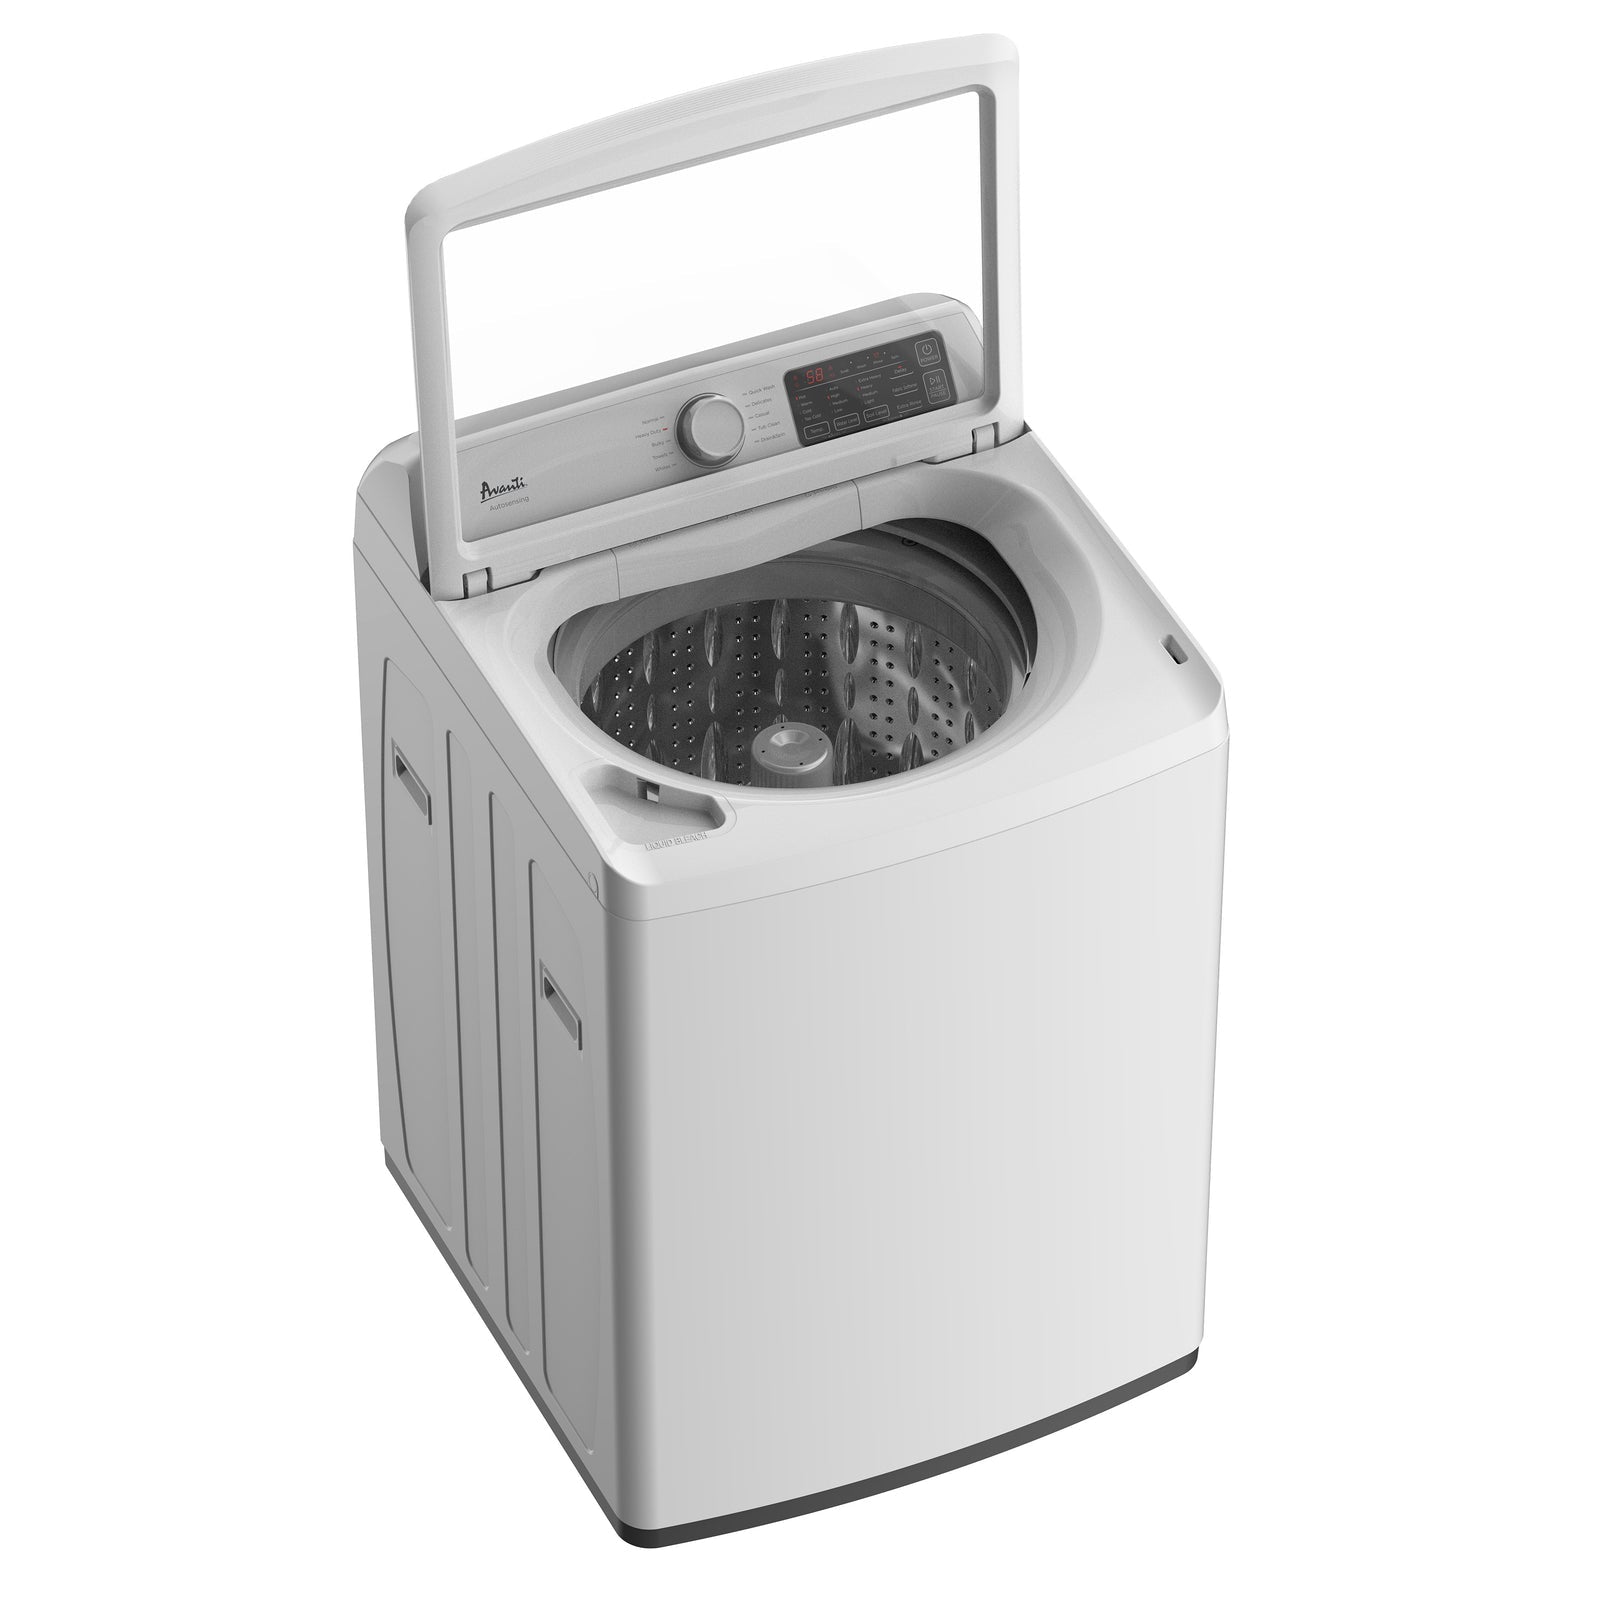 Avanti Compact Top Load Washing Machine, 3.7 cu. ft. Capacity - White / 3.7 cu. ft.